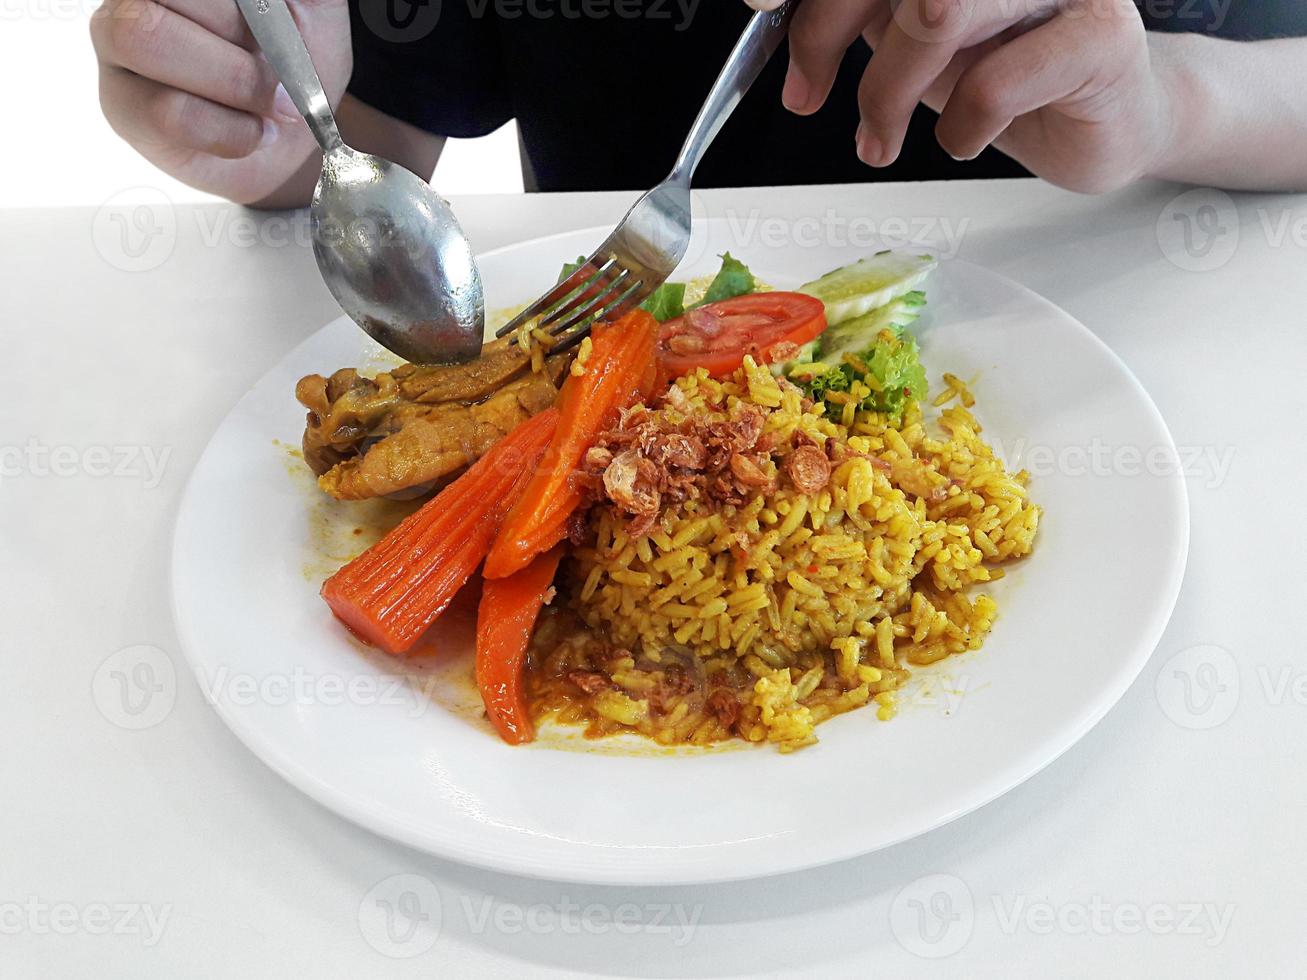 arroz amarelo muçulmano com frango na chapa branca isolada no fundo branco foto